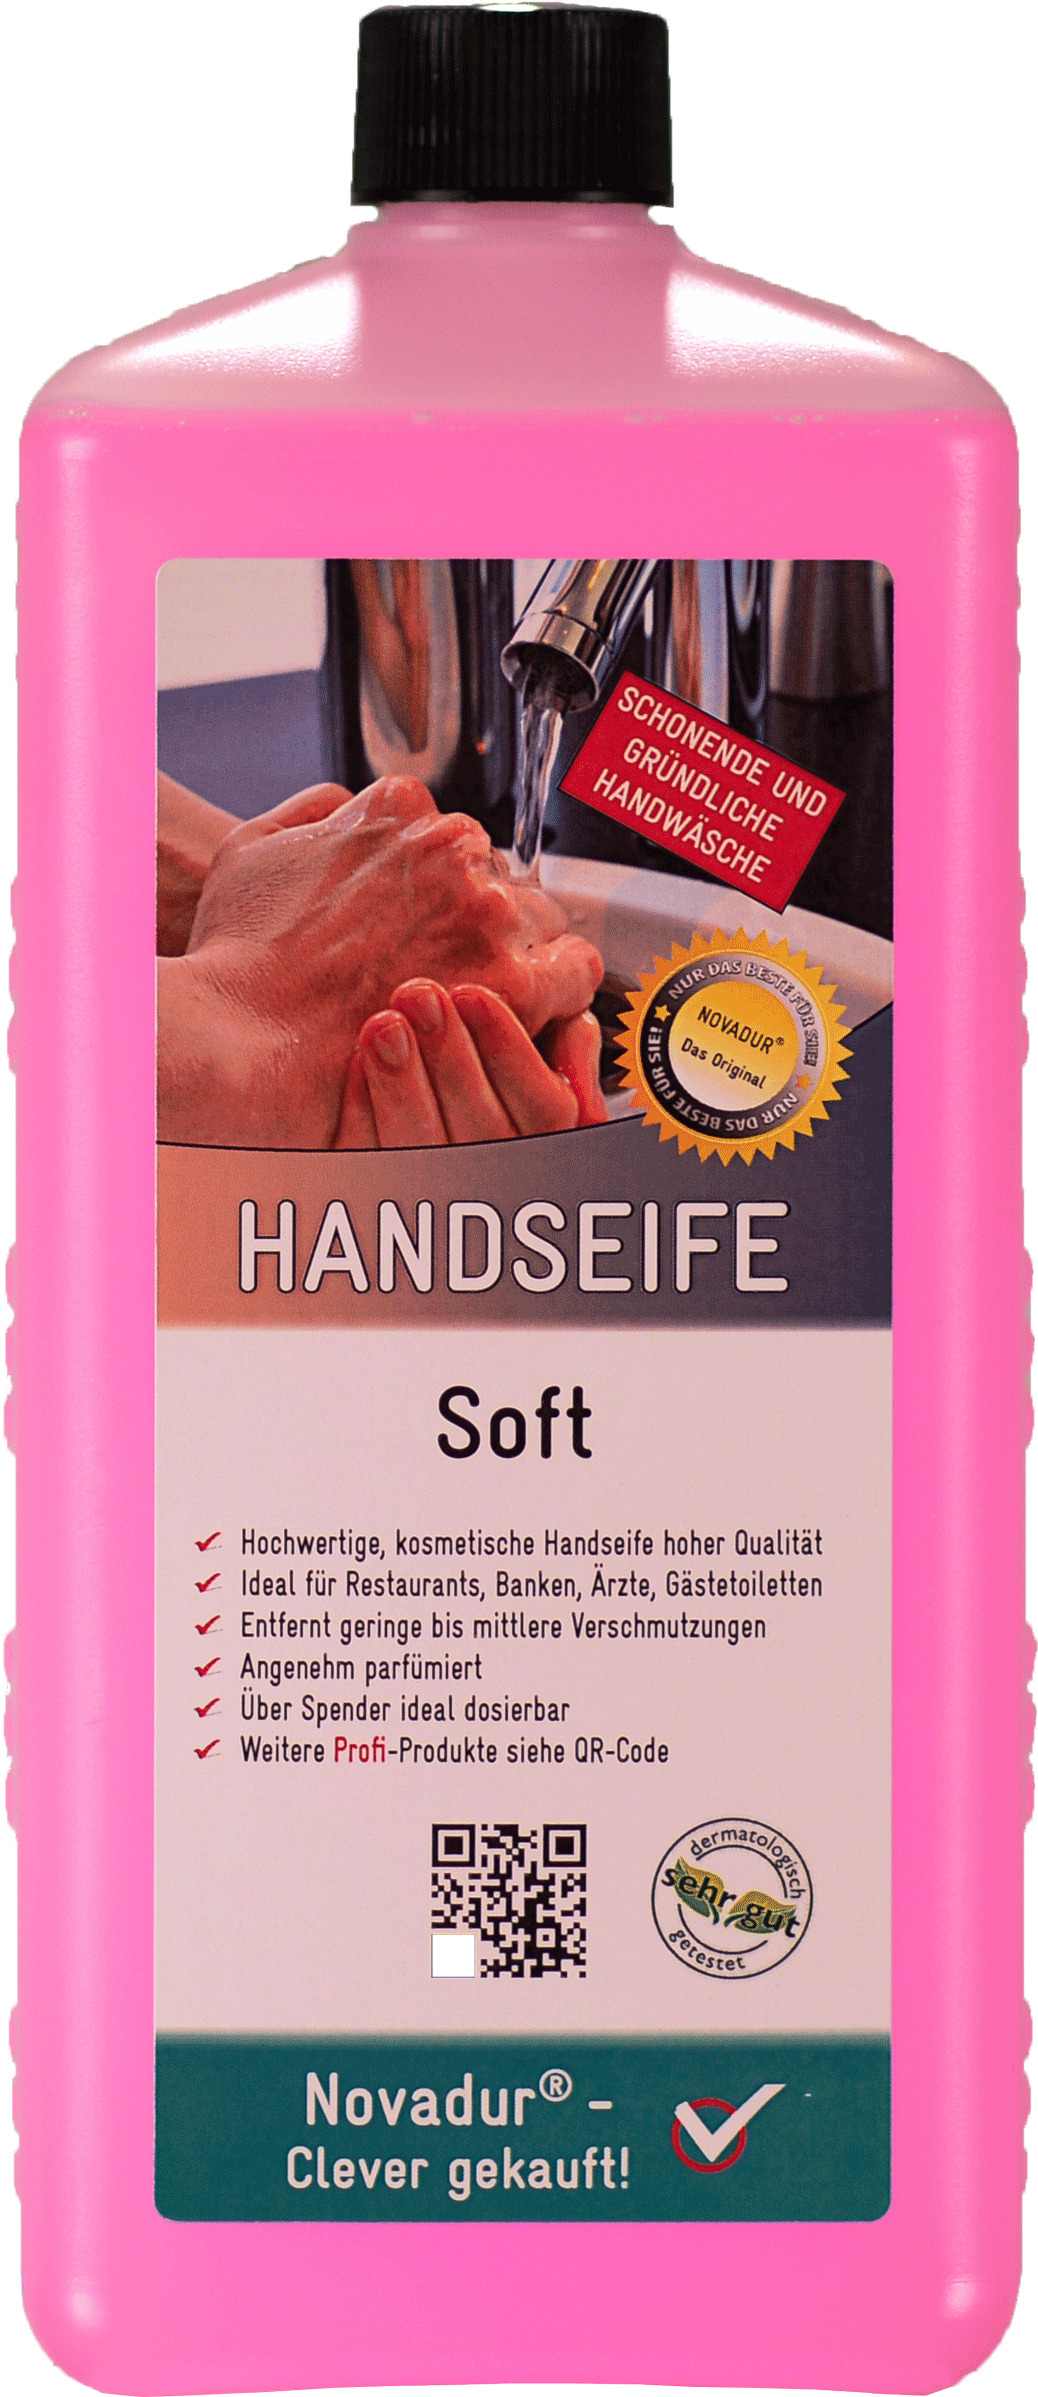 Handseife Soft